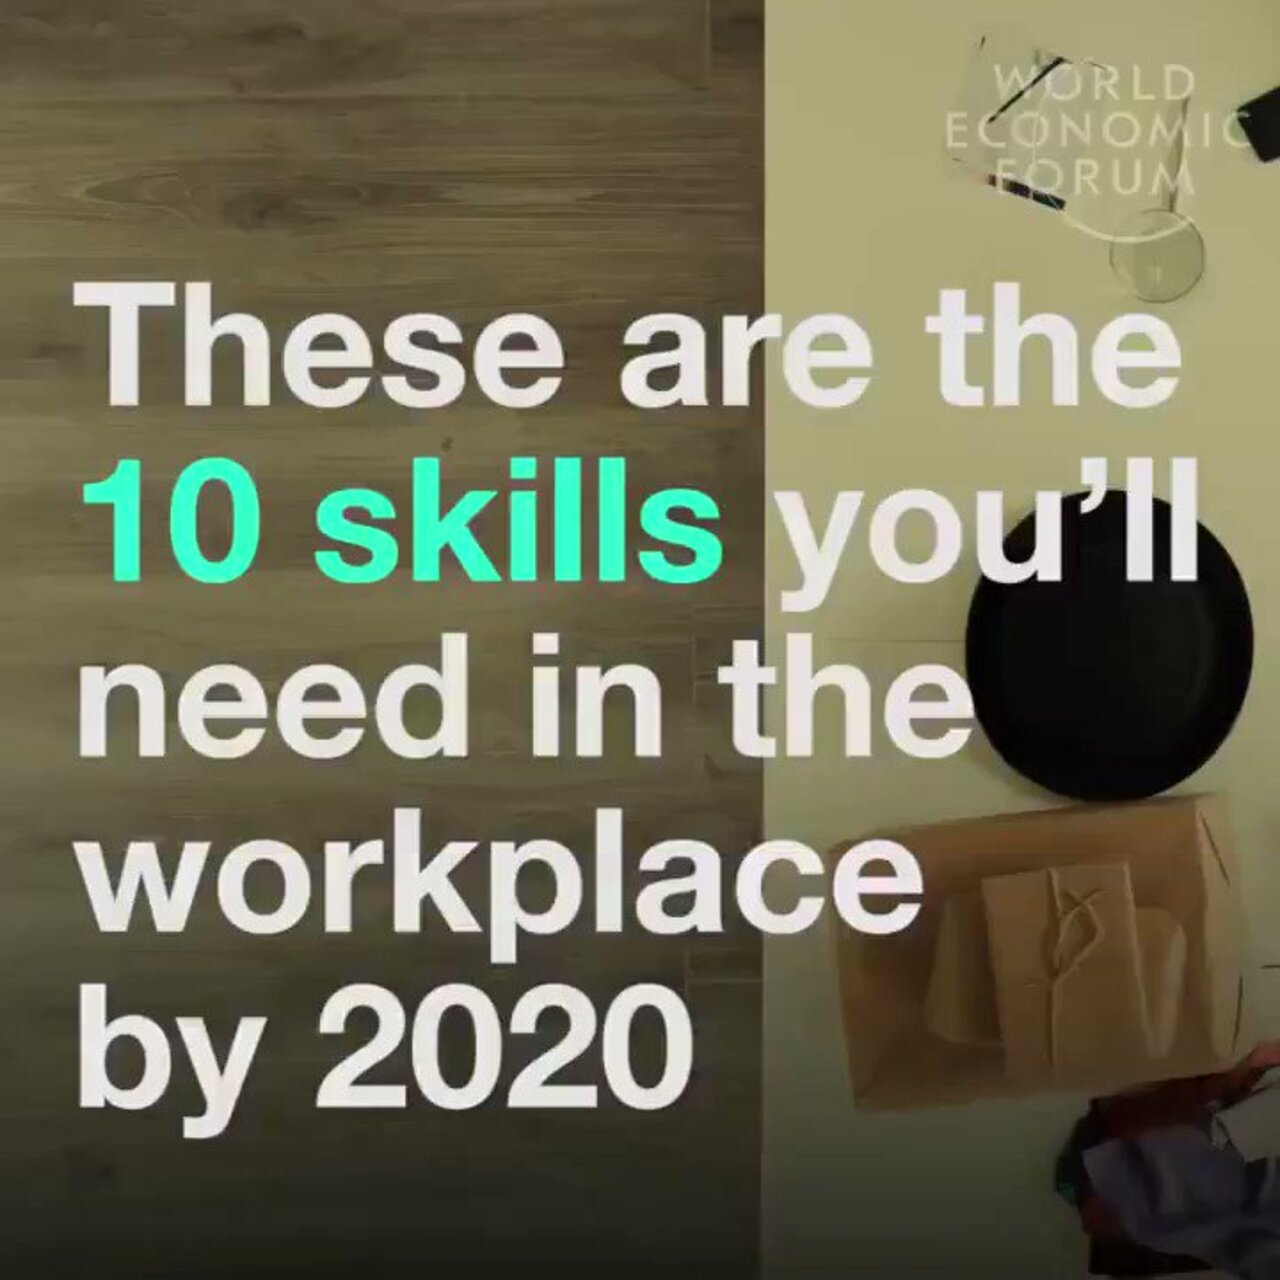 These are the 10 #skills you’ll need in the #Workplace by 2020 TY @wef via @enricomolinari  #FutureofWork #STEM #digital #AI #innovation #datascience #EdTech @schmarzo @Denisguarda @AntonioSelas @antgrasso @UrsBolt @Ronald_vanLoon @Lago72 @vinod1975 @PaulTDenham @TamaraMcCleary https://t.co/dN1tGYwJLv